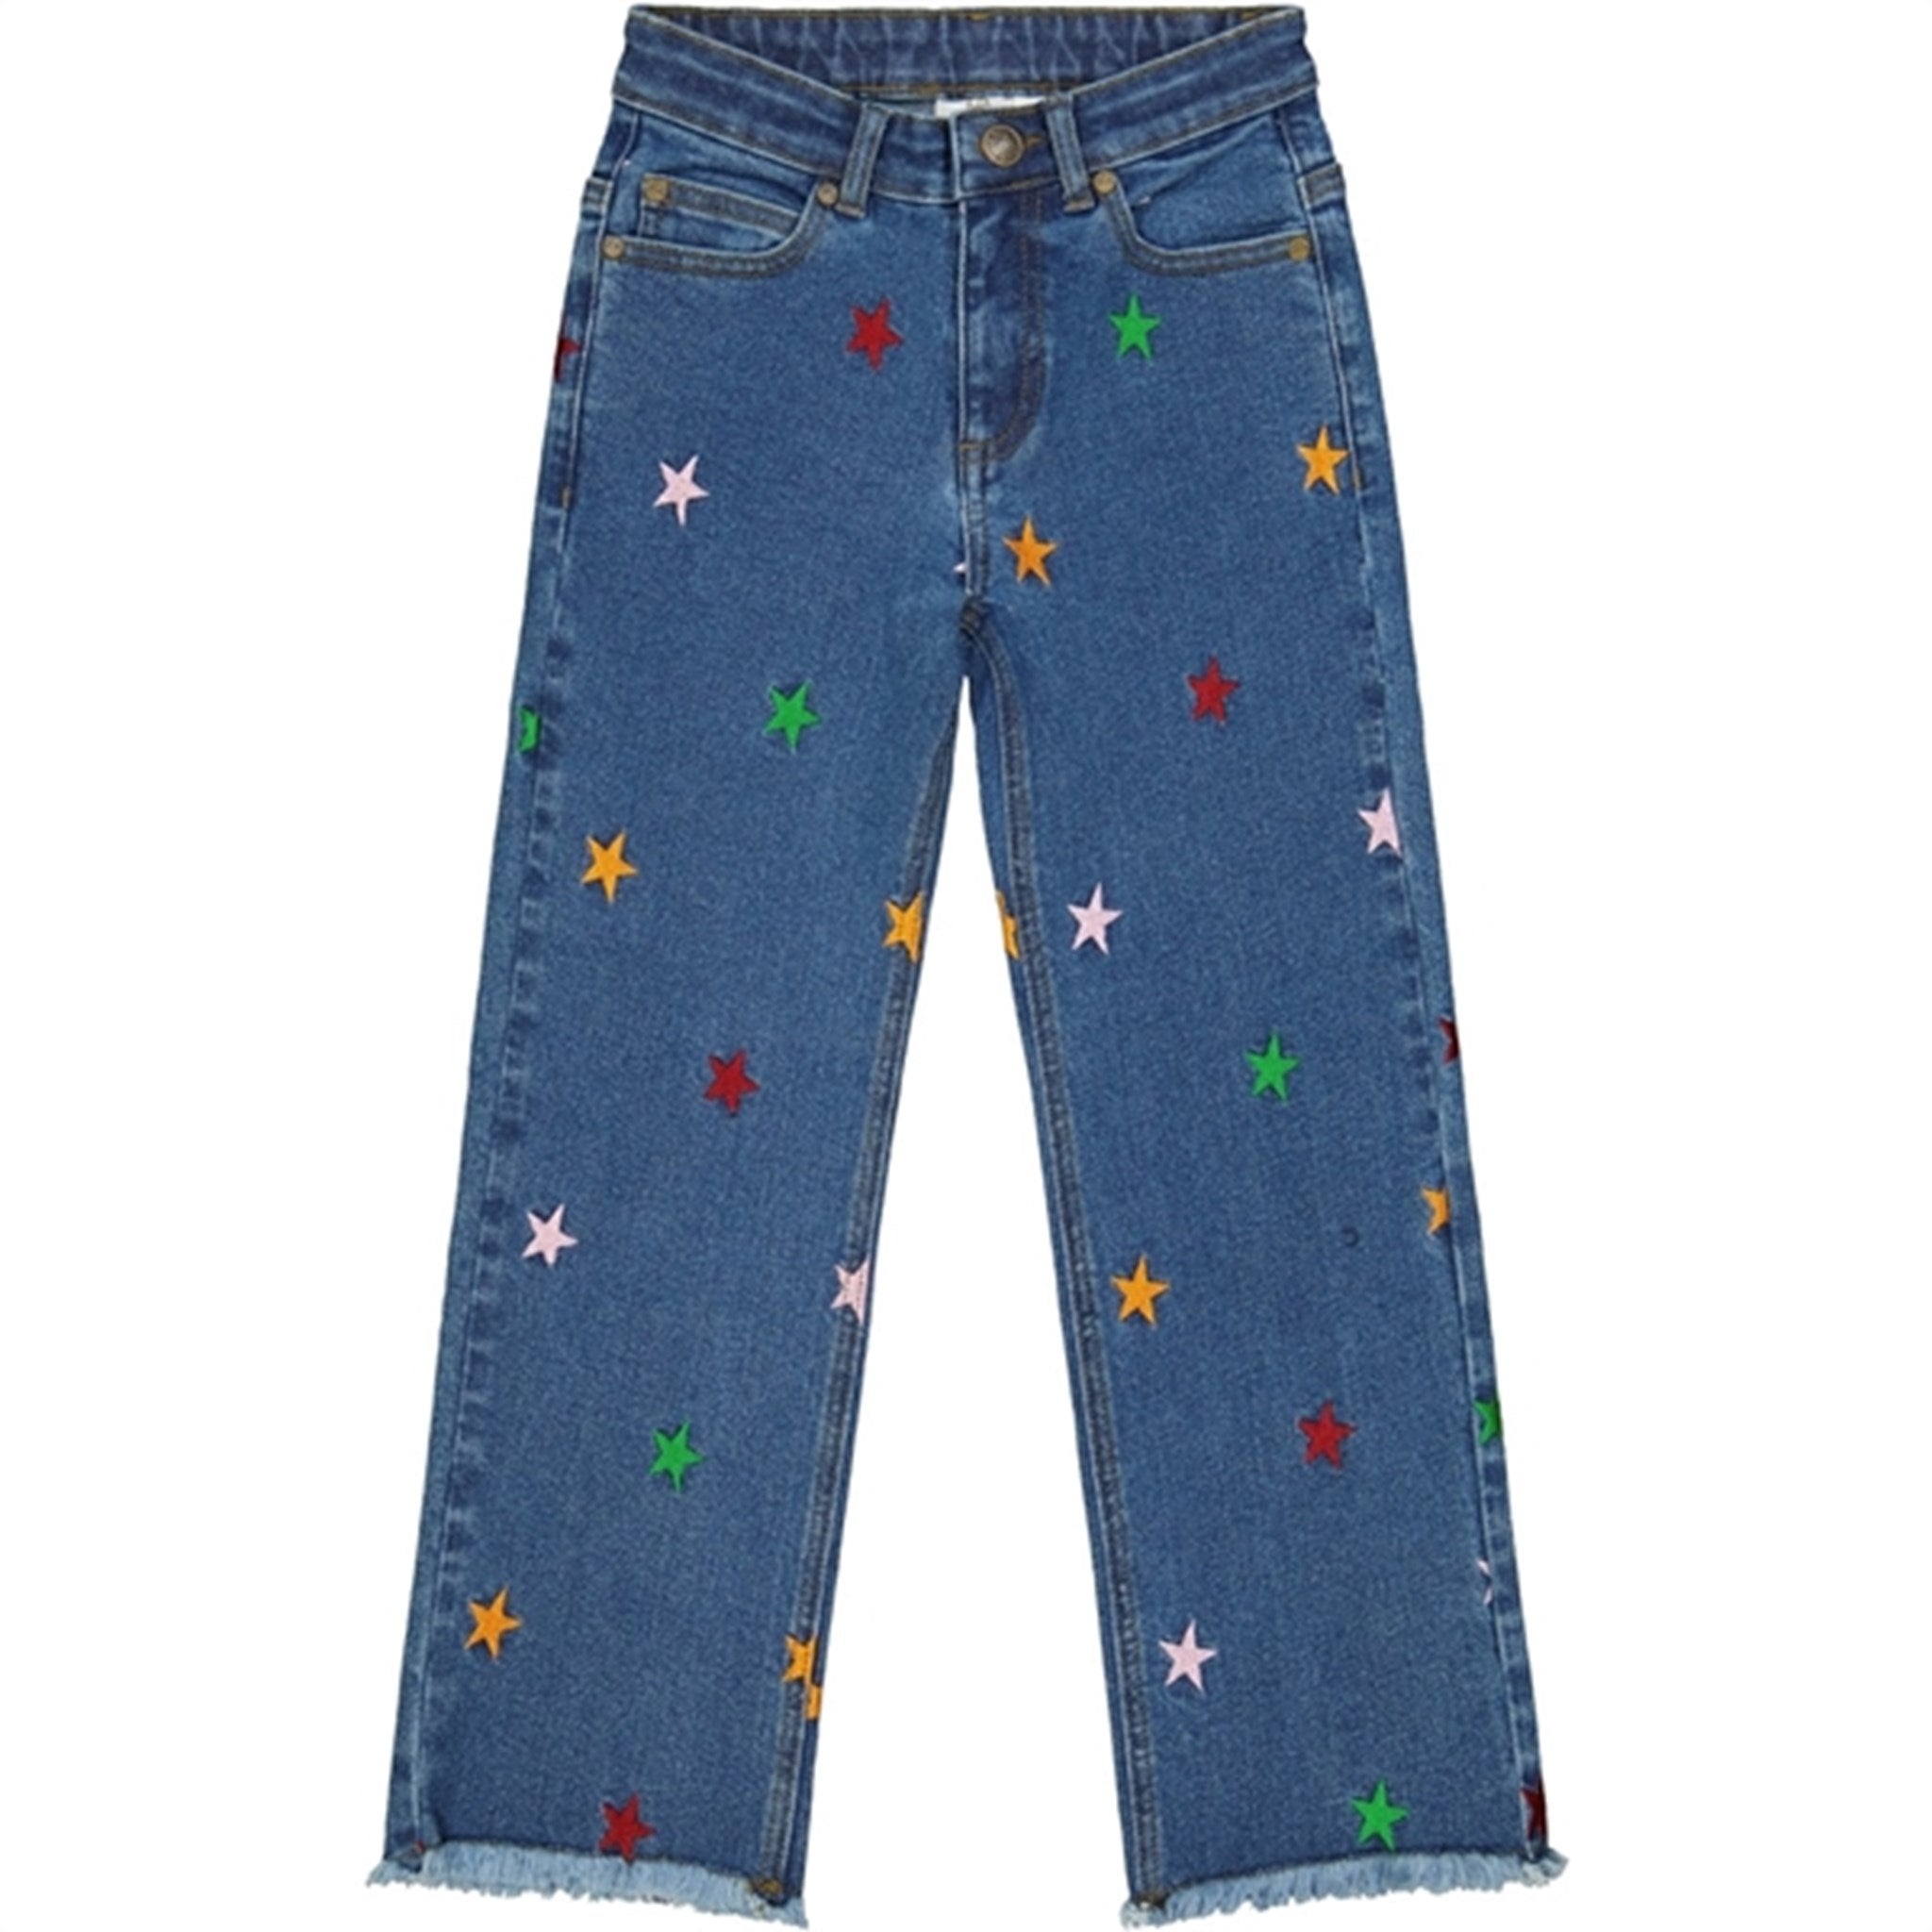 The New Medium Blue Dania Star Wide Jeans